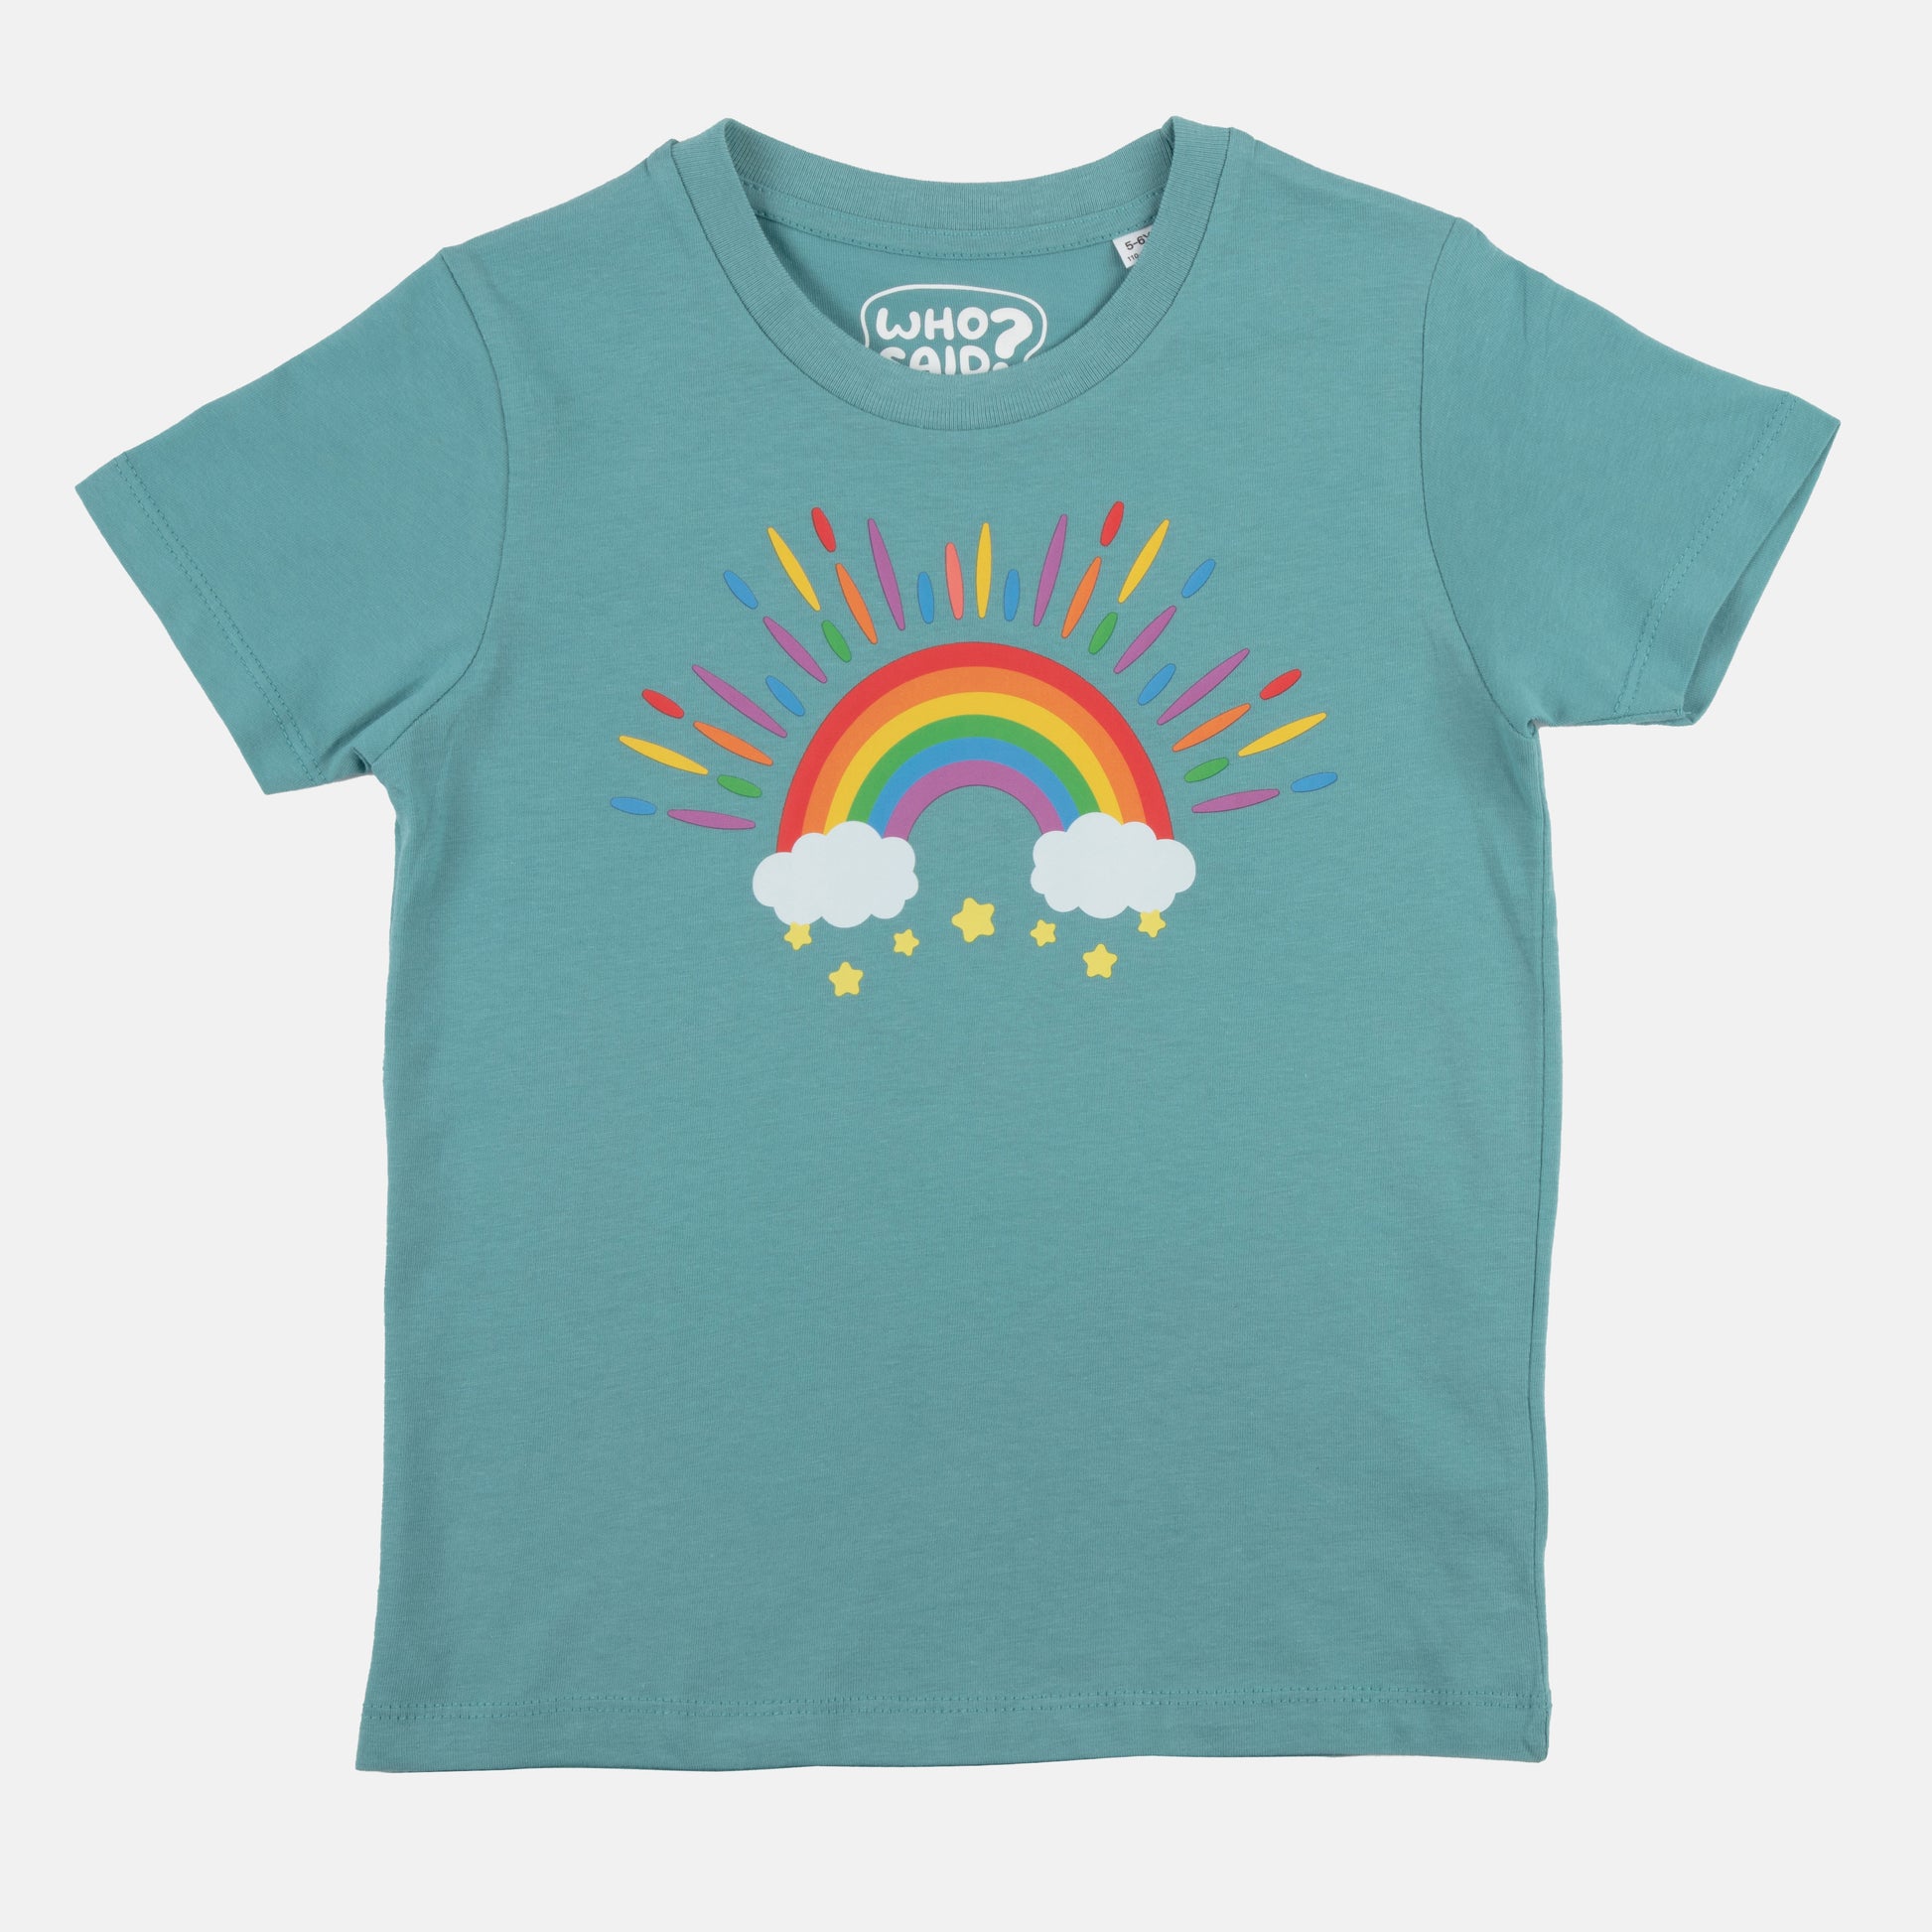 Lieblingsfarbe Bunt! | Shirt | Who said